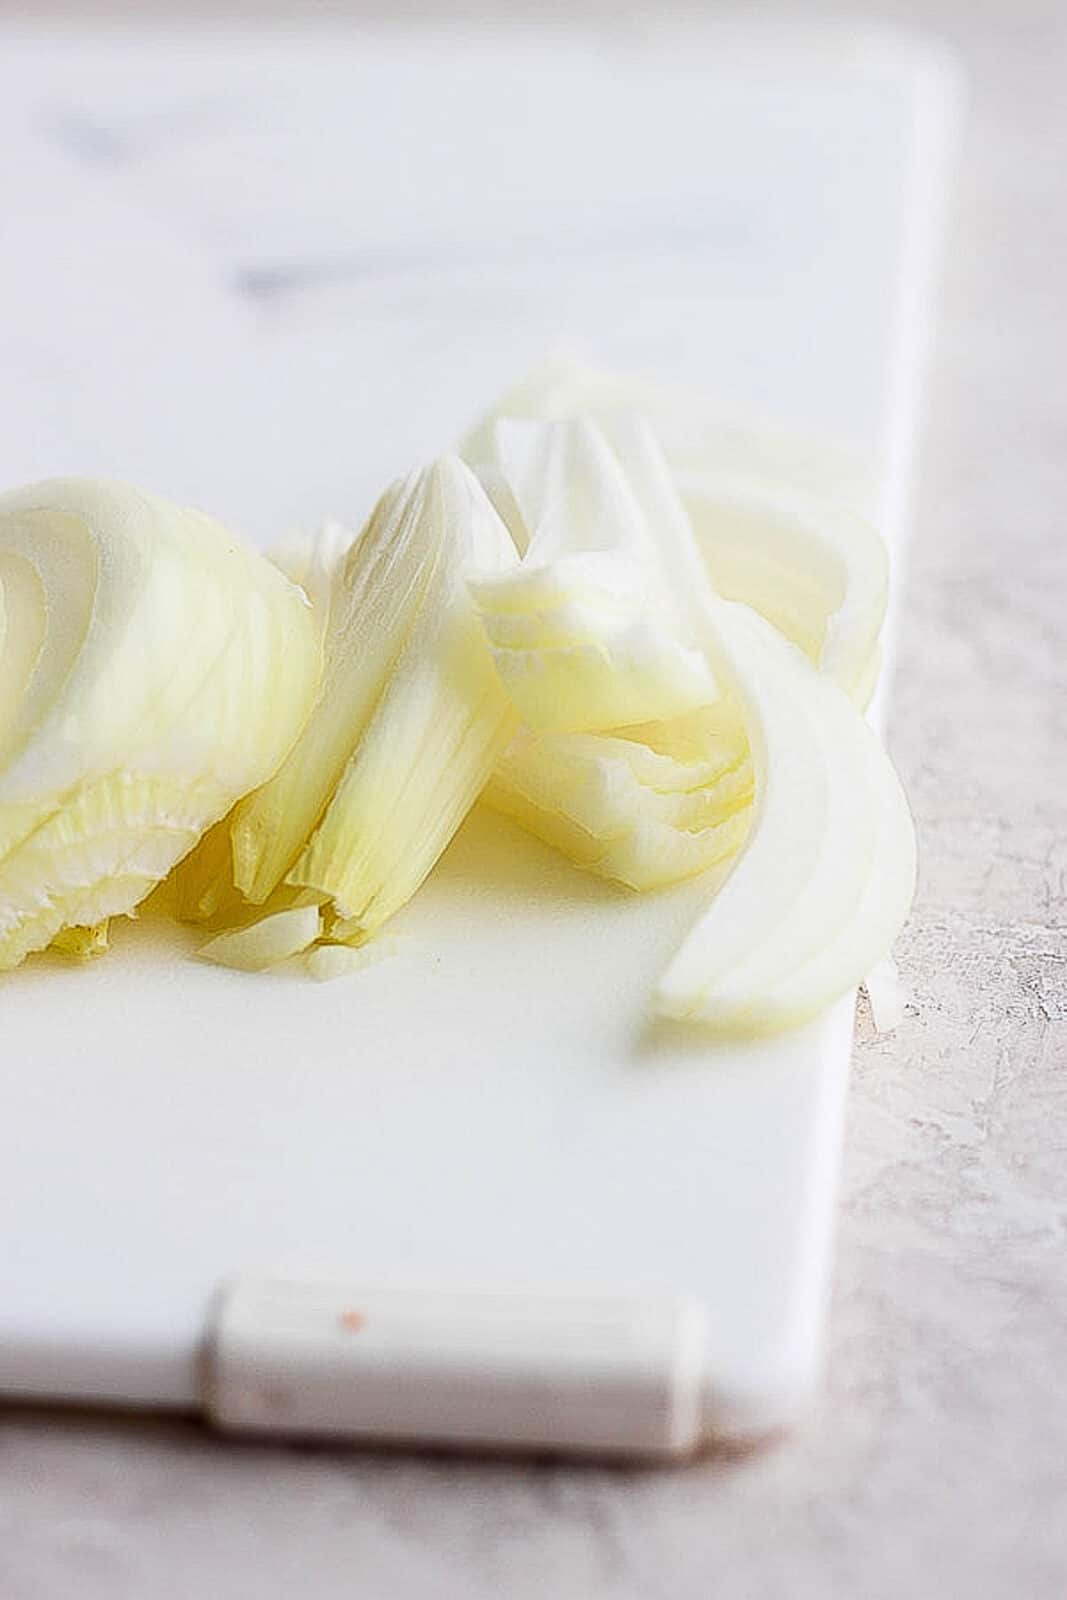 Onion slices on a cutting board.